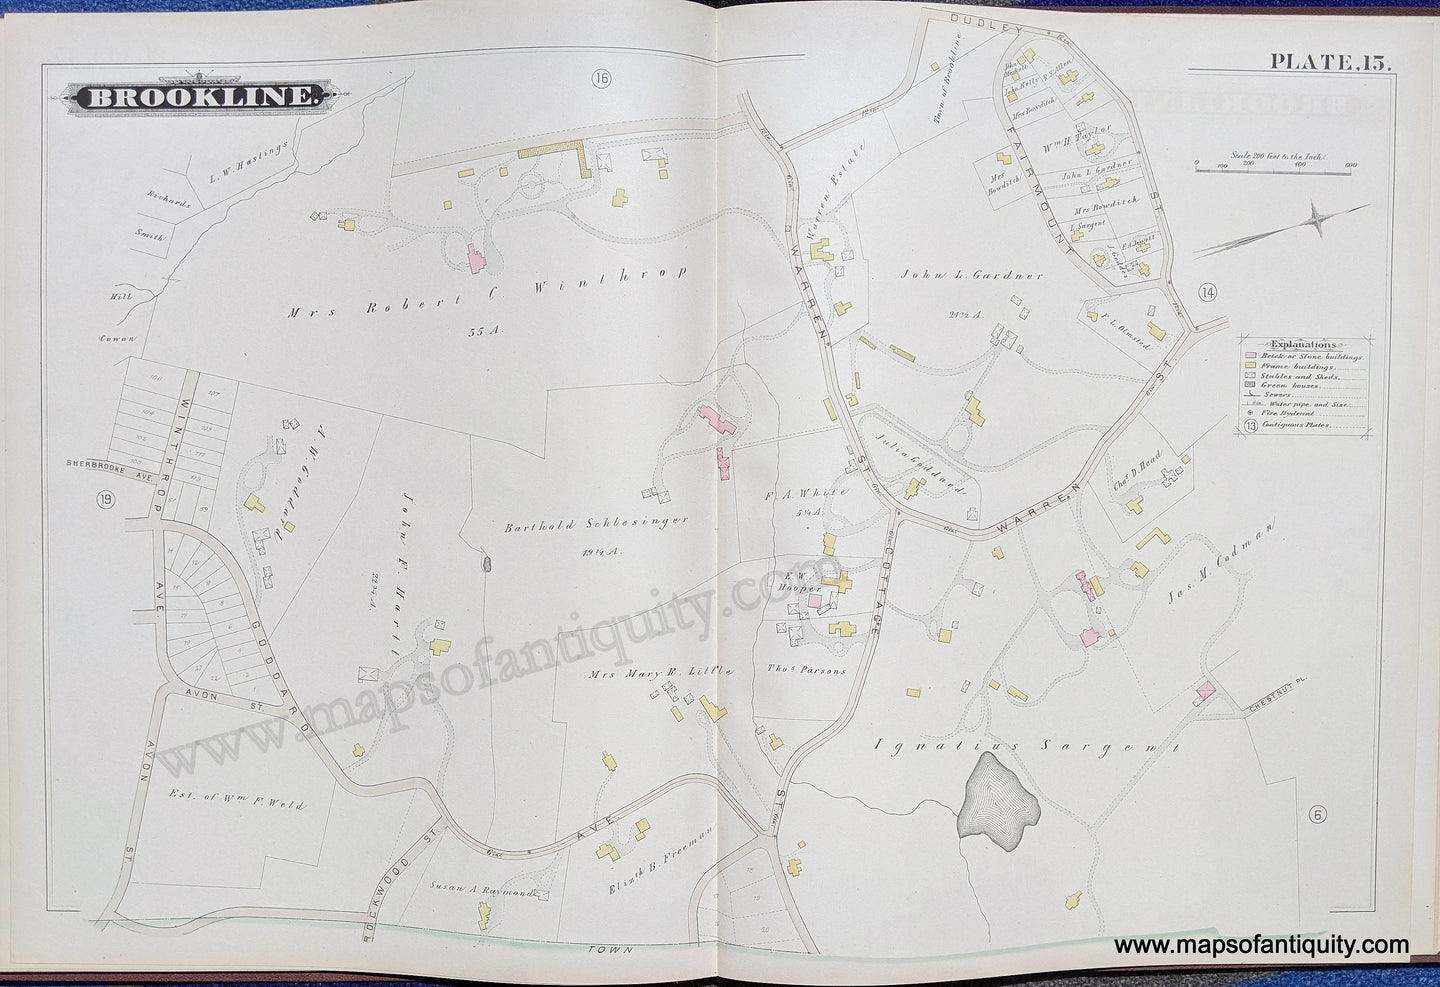 Antique-Map-Brookline-Mass.-Plate-15-United-States-Massachusetts-1884-Hopkins-Maps-Of-Antiquity-1800s-19th-century